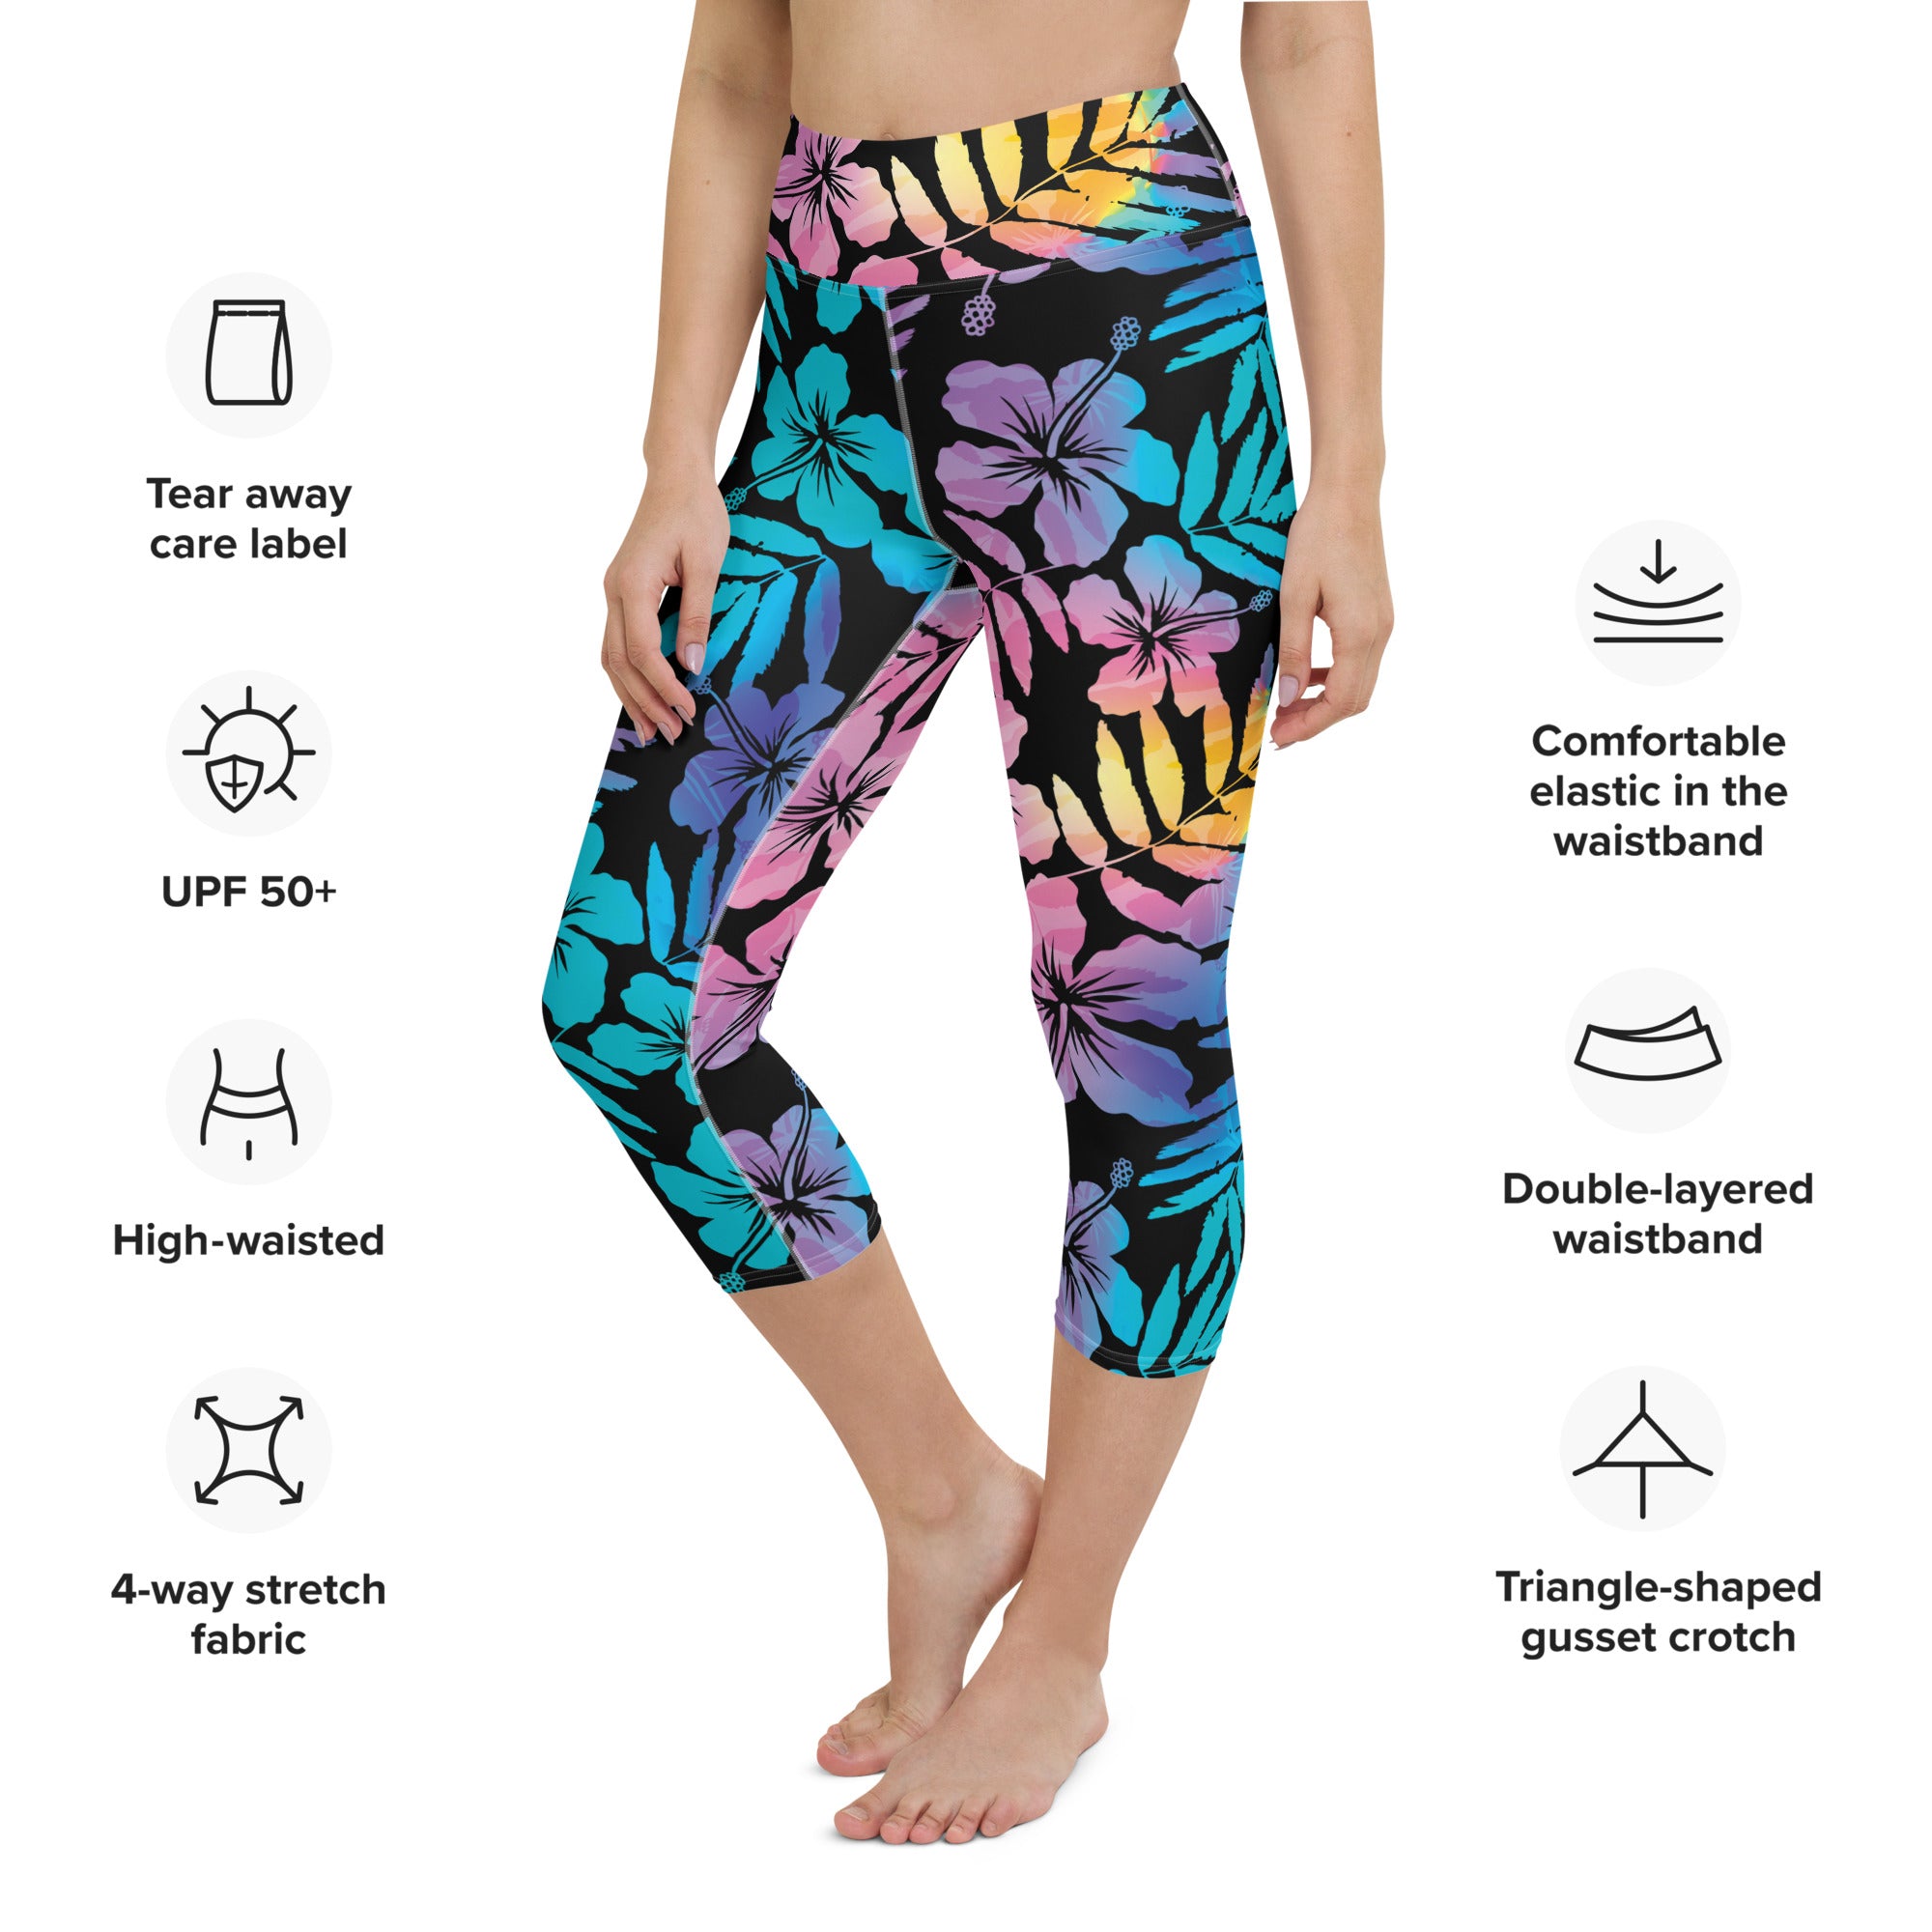 Alo Yoga High Waist 2 in 1 Capri Crop Shorts Leggings Athletic Black Sz:M  Modest